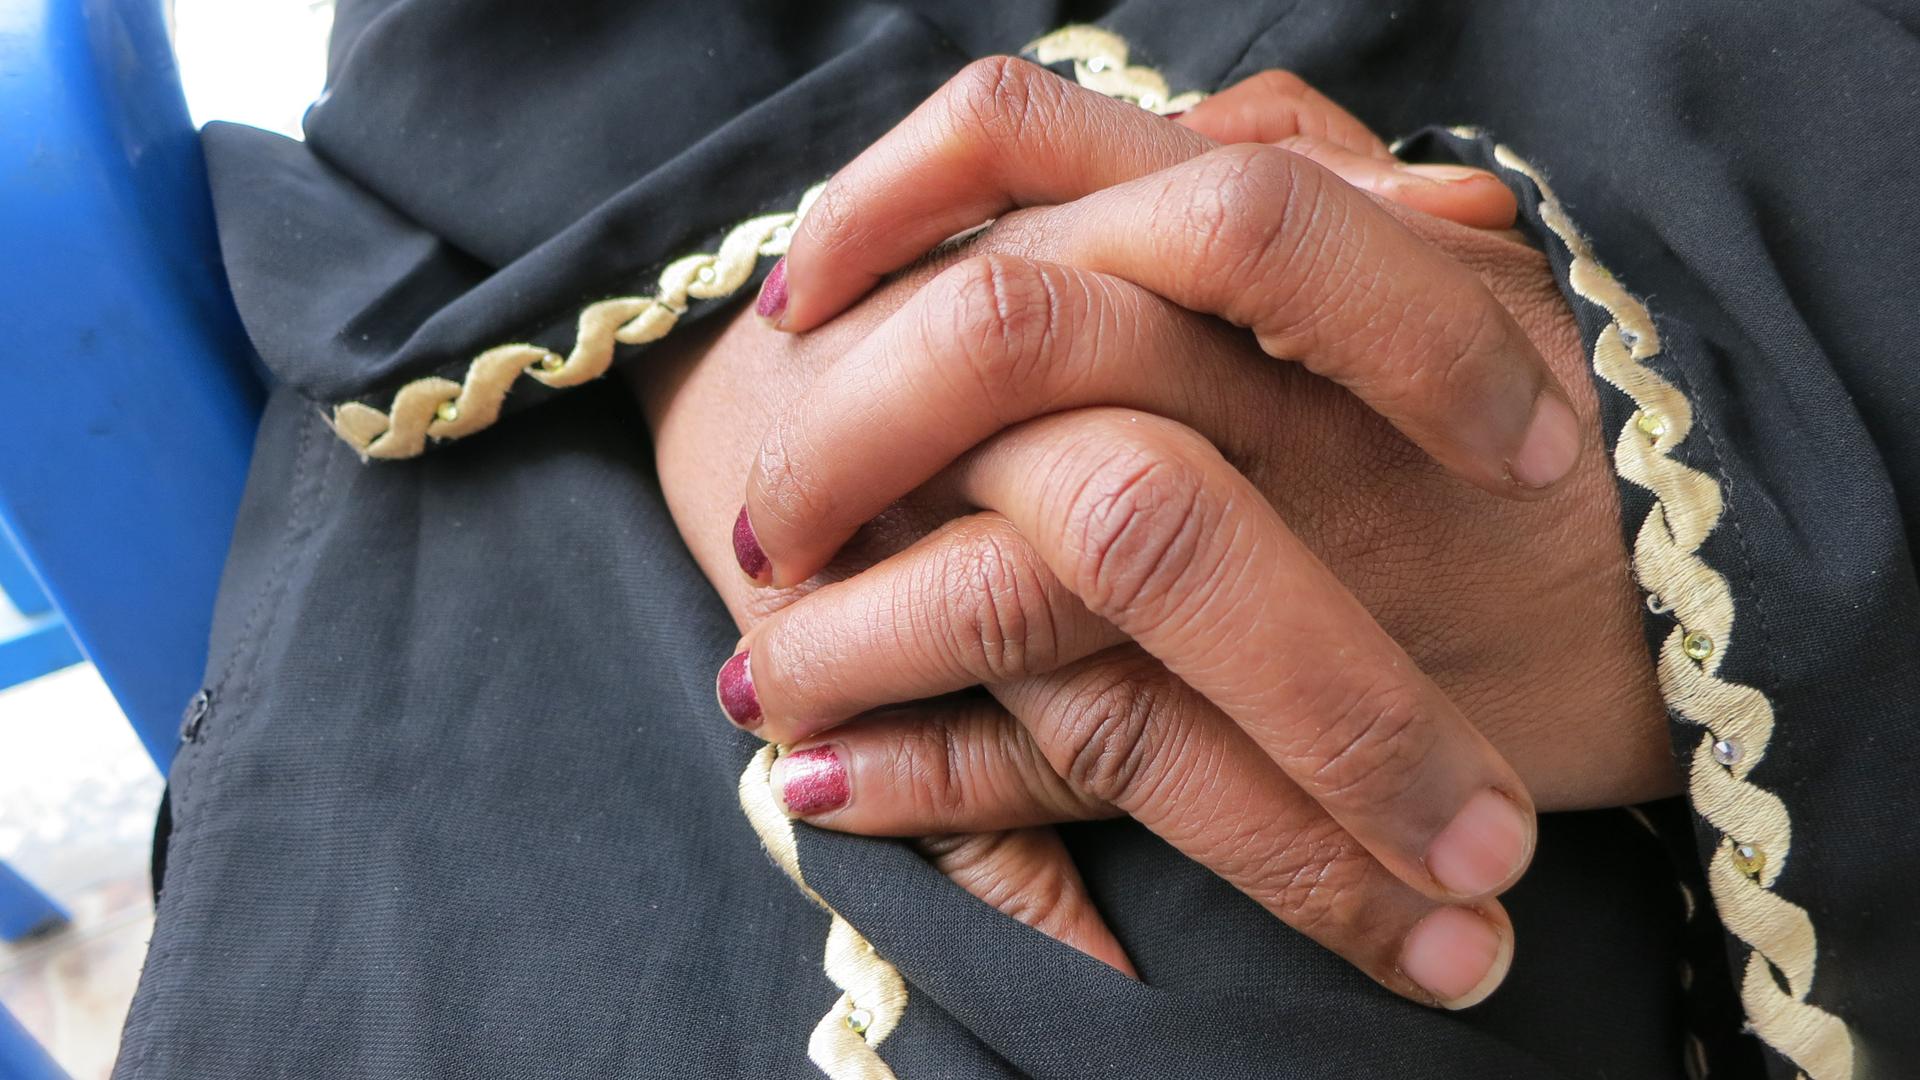 Abortion in Ethiopia — Khadija's hands